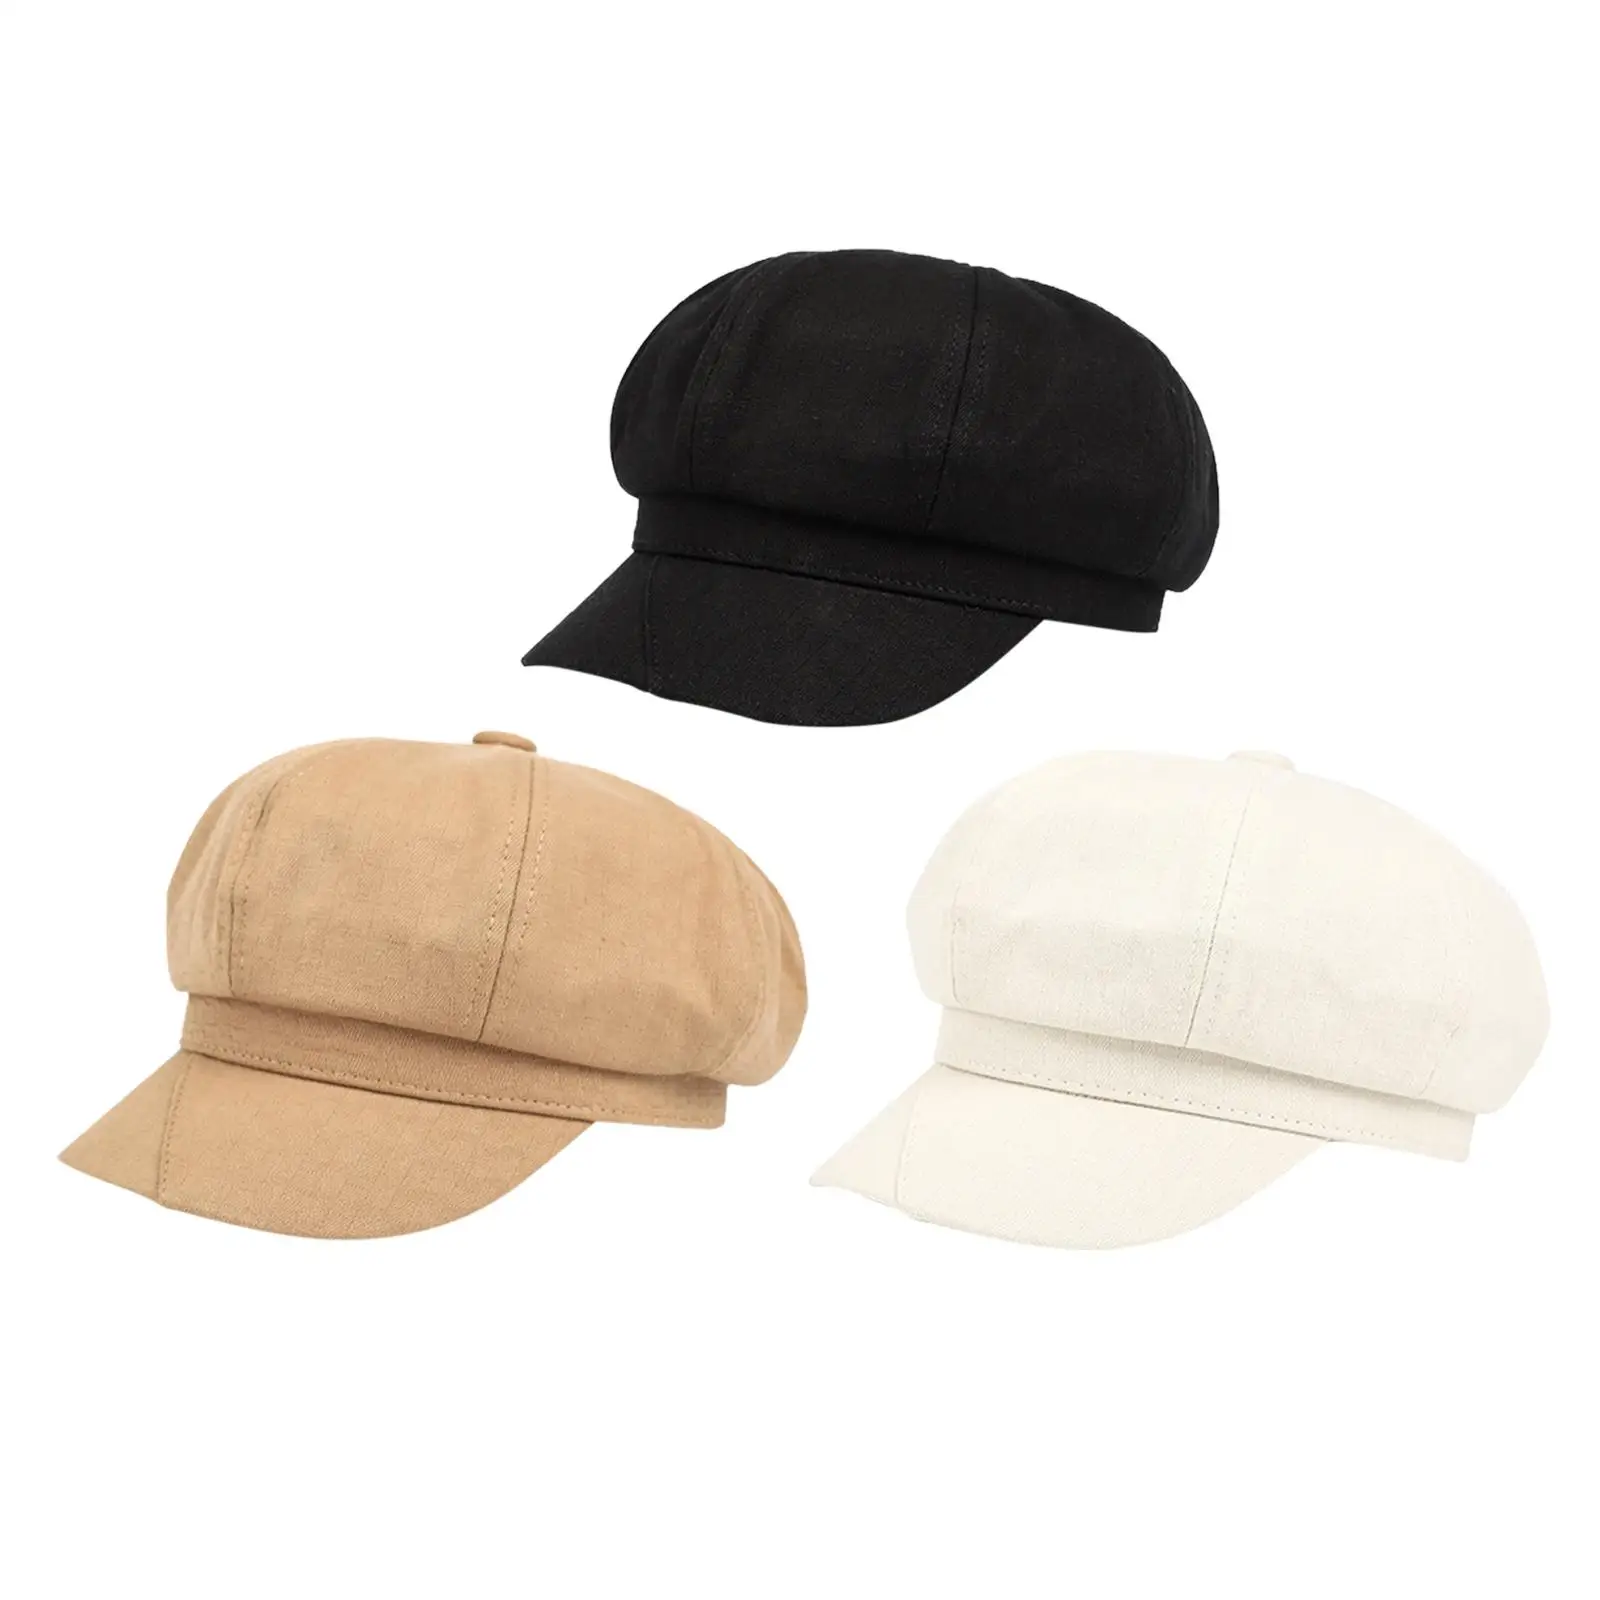 Visor Hats for Women Soft Adjustable 8 Panels Sun Hat Paperboy Hat Newsboy Hat for Outdoor Fisherman Ladies Girls Painter